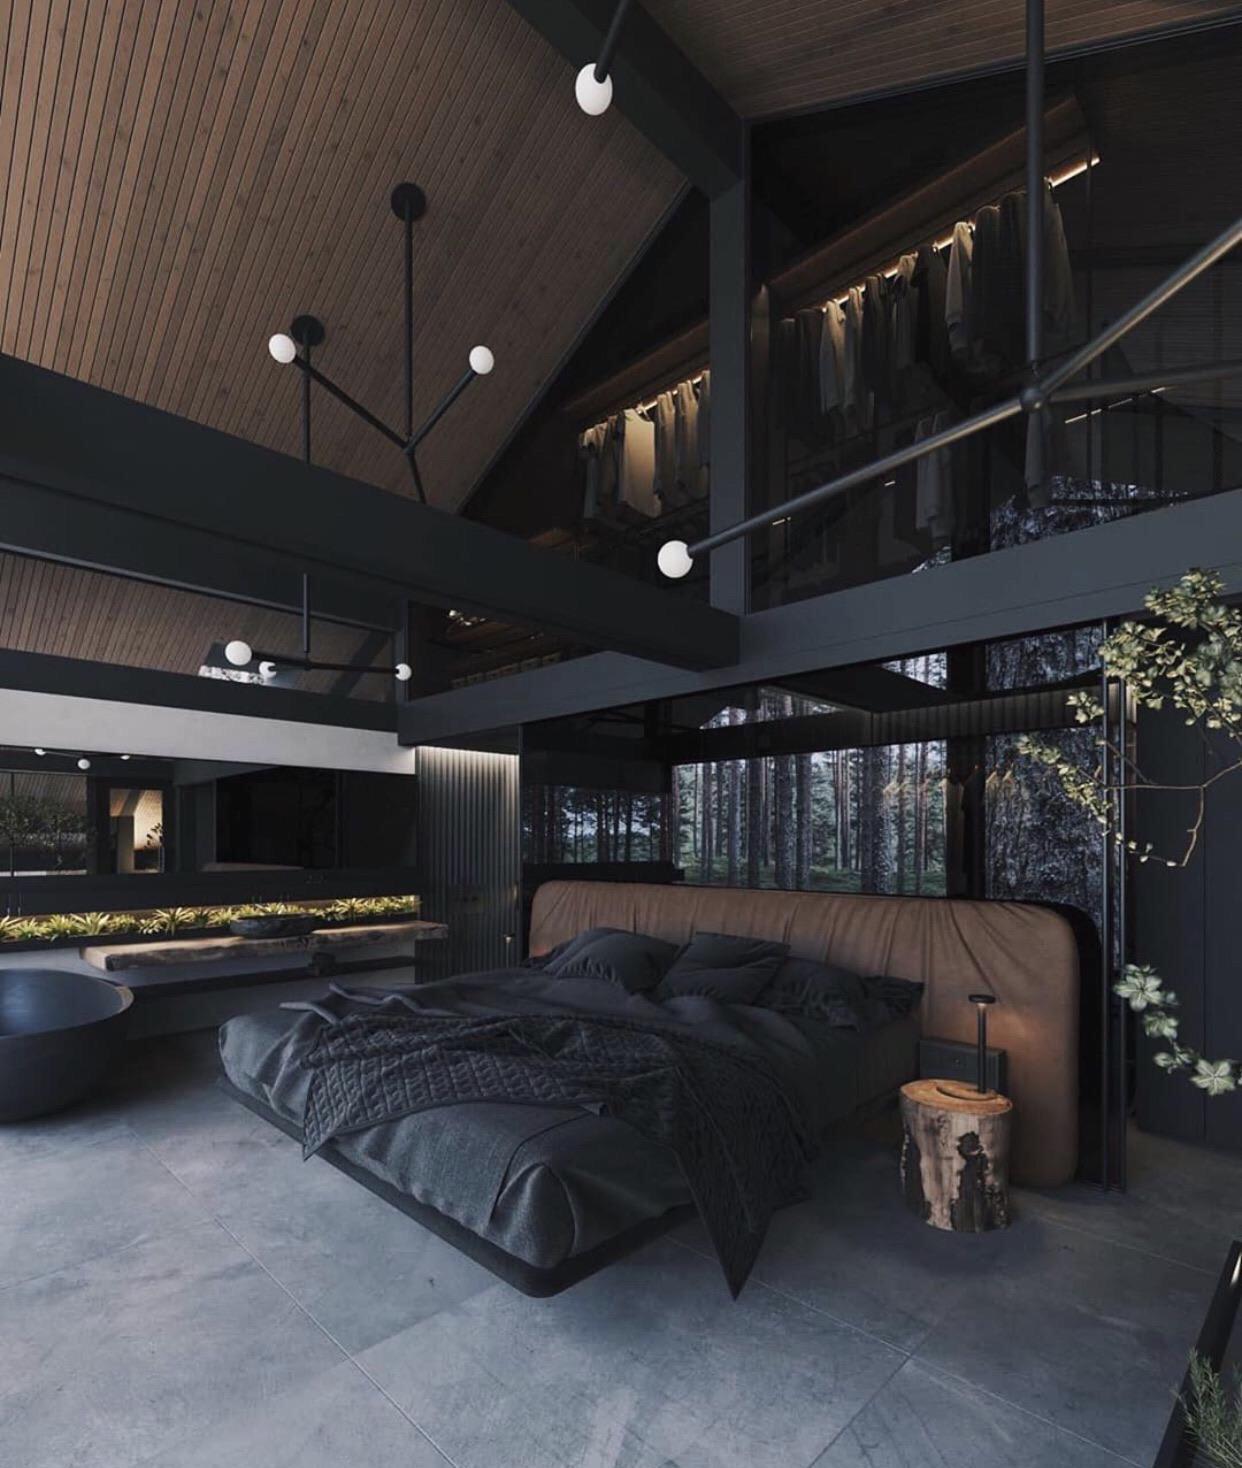 This dark themed bedroom